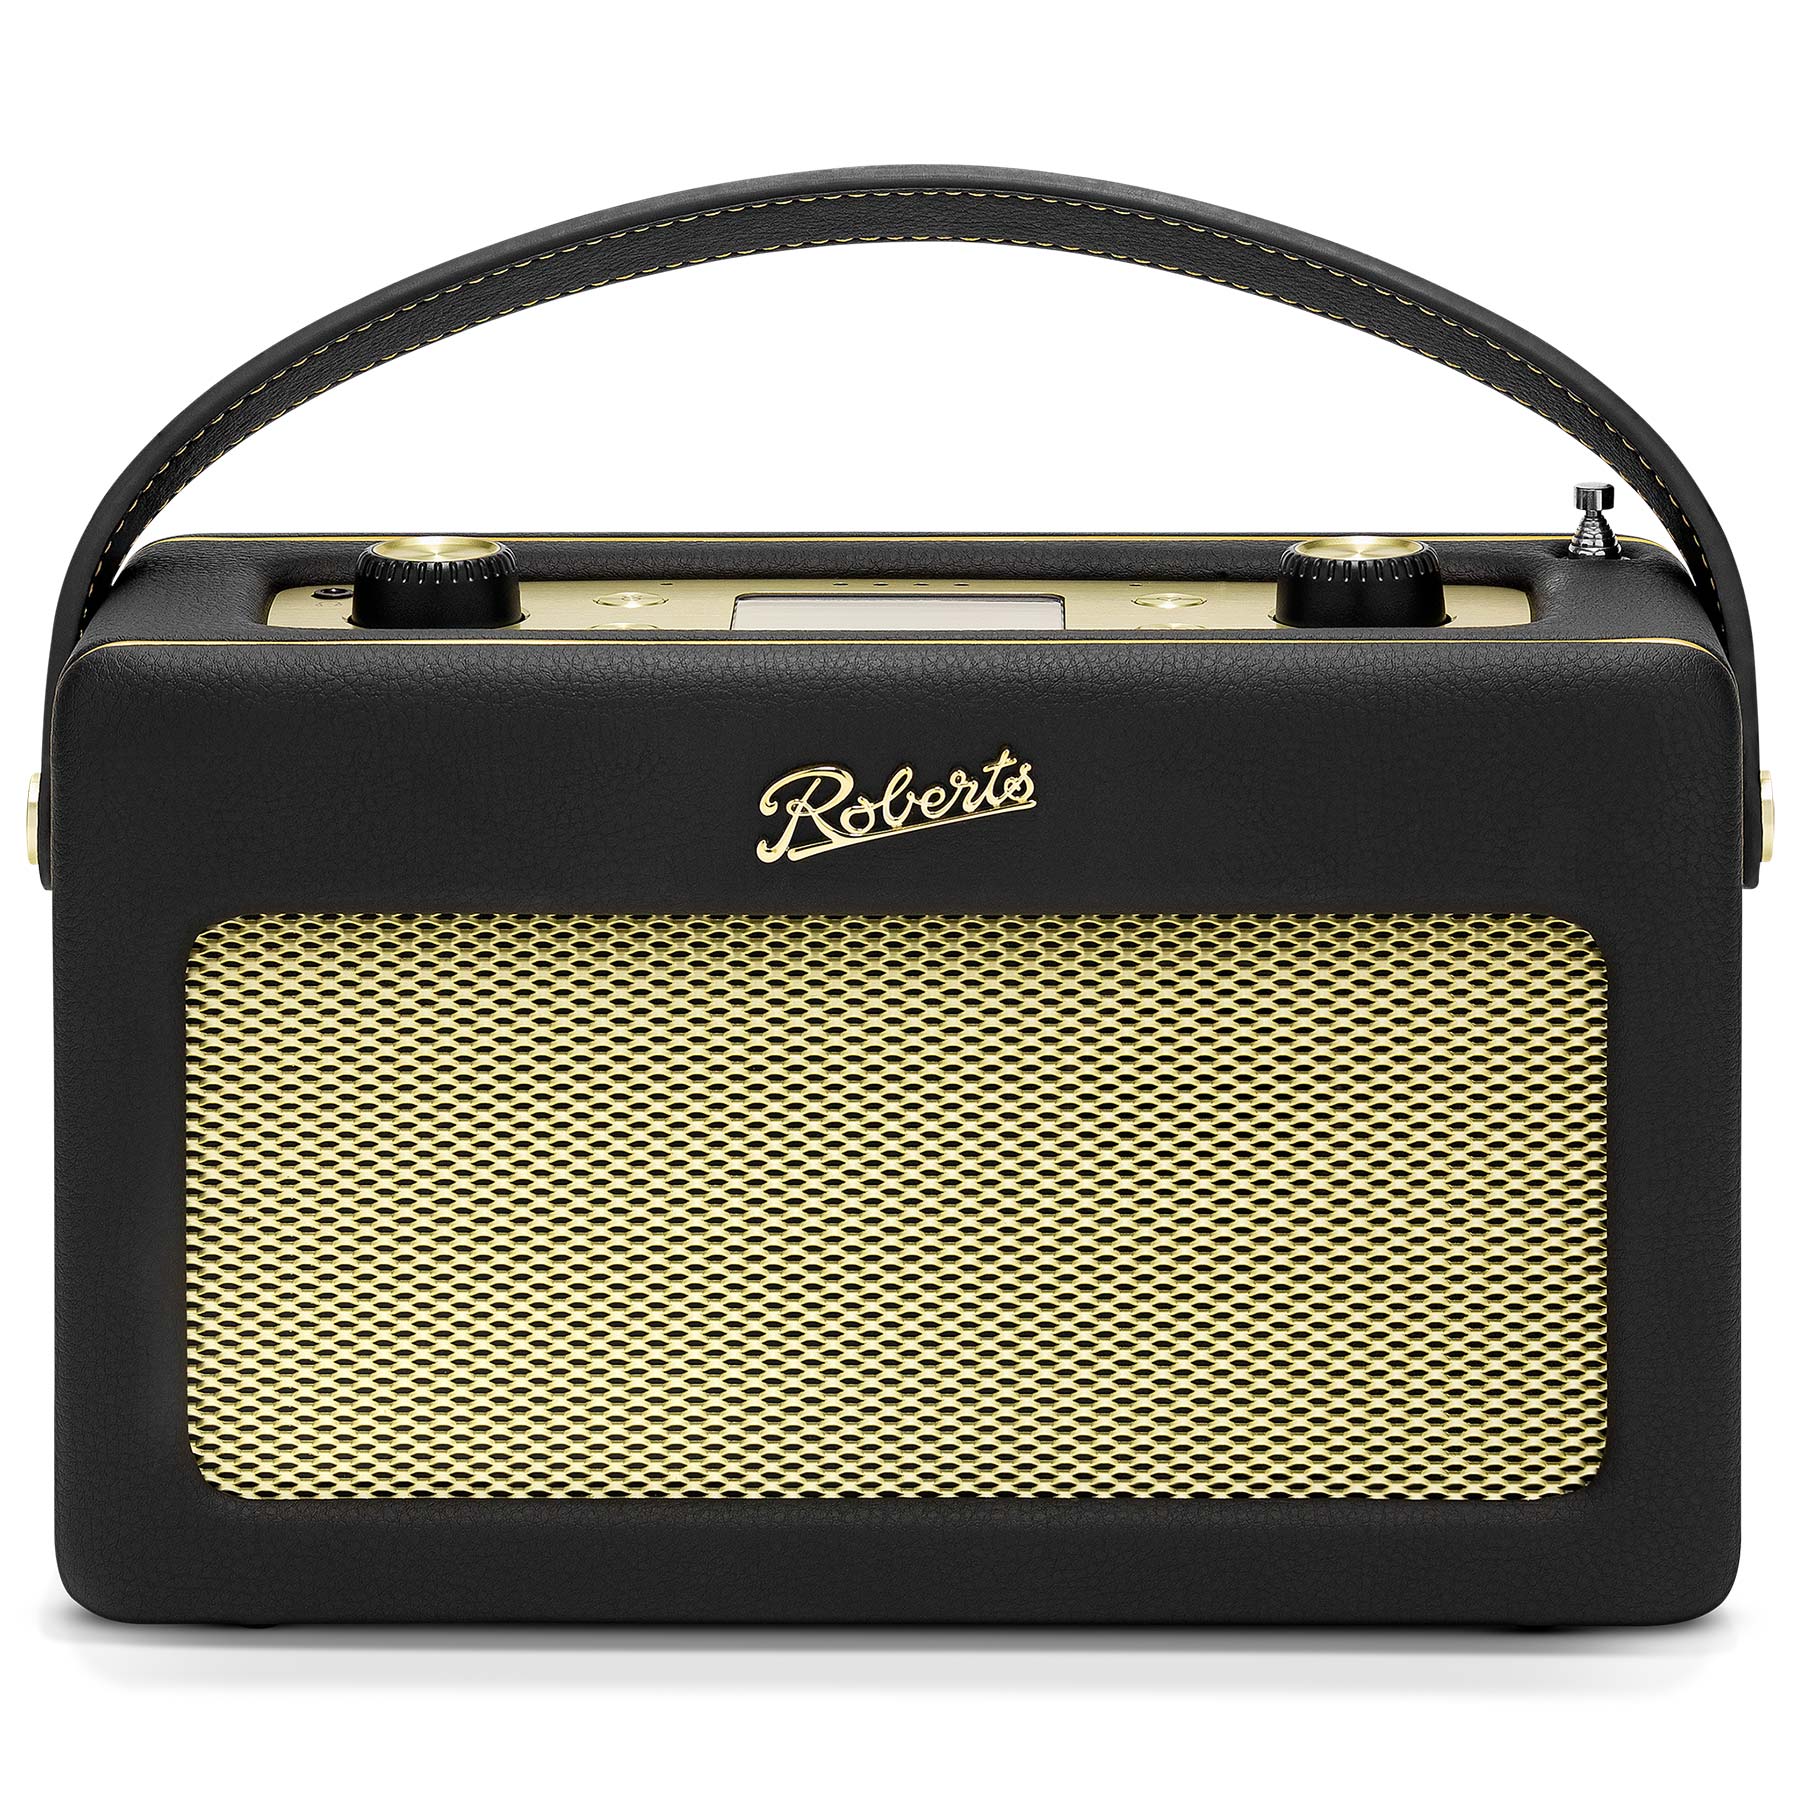 Roberts REV ICONBK Revival Icon Smart Radio with Amazon Alexa in Black